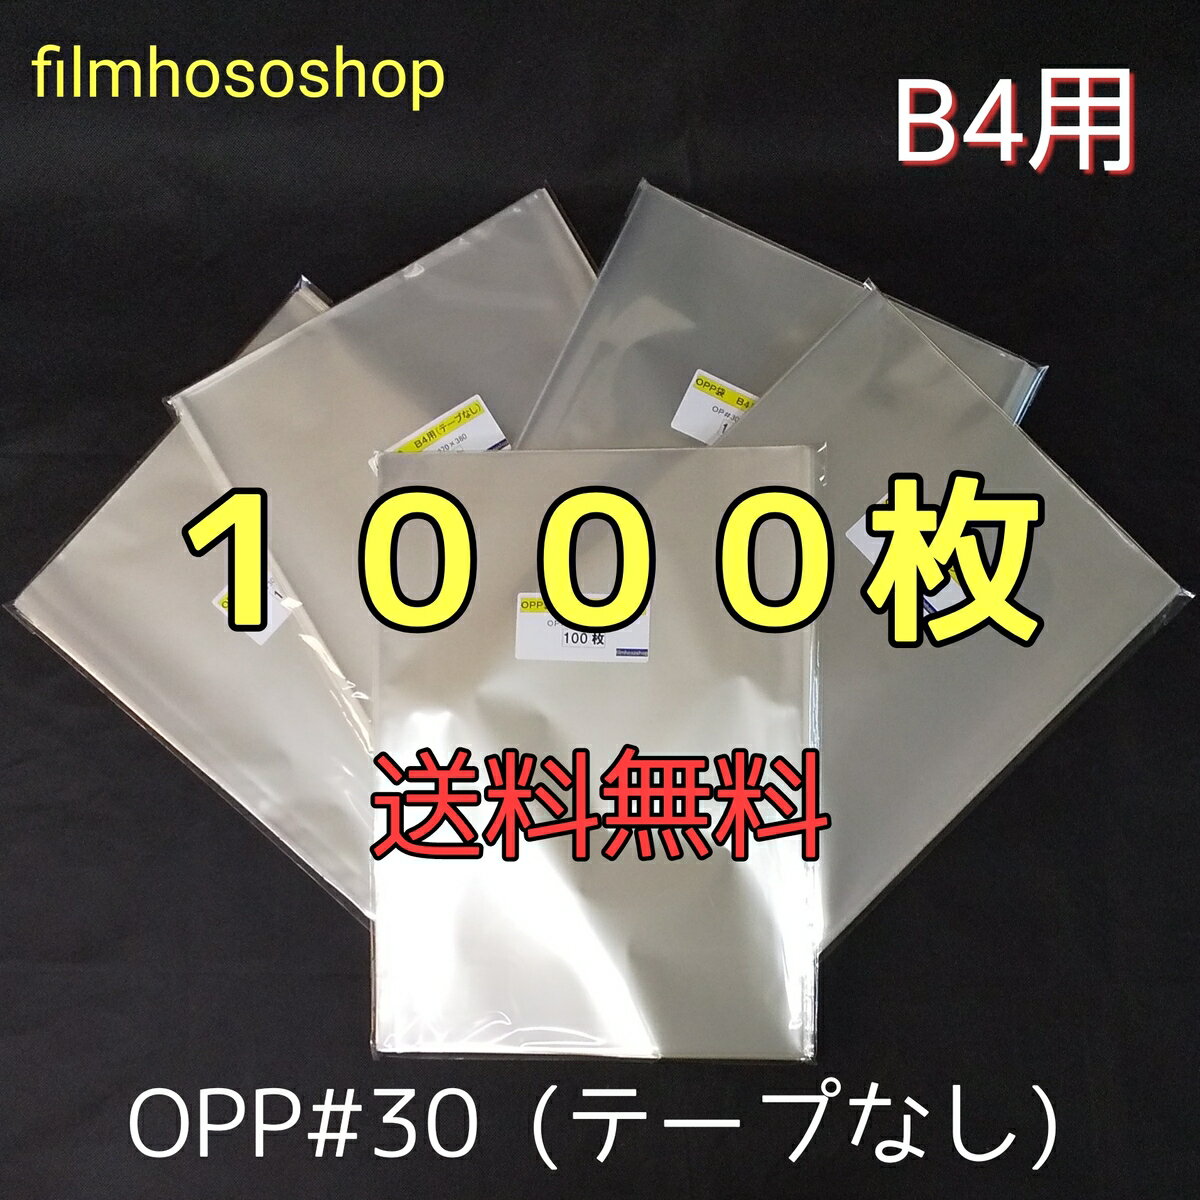 OPP袋 B4 1000枚 30ミクロン 270×380mm テープなし 口合わせ 透明袋 透明フィルム封筒 B4用紙用 ラッピング袋 Tシャツ用袋にもちょうどいい梱包袋 送料無料 日本製 包装資材 工場直販